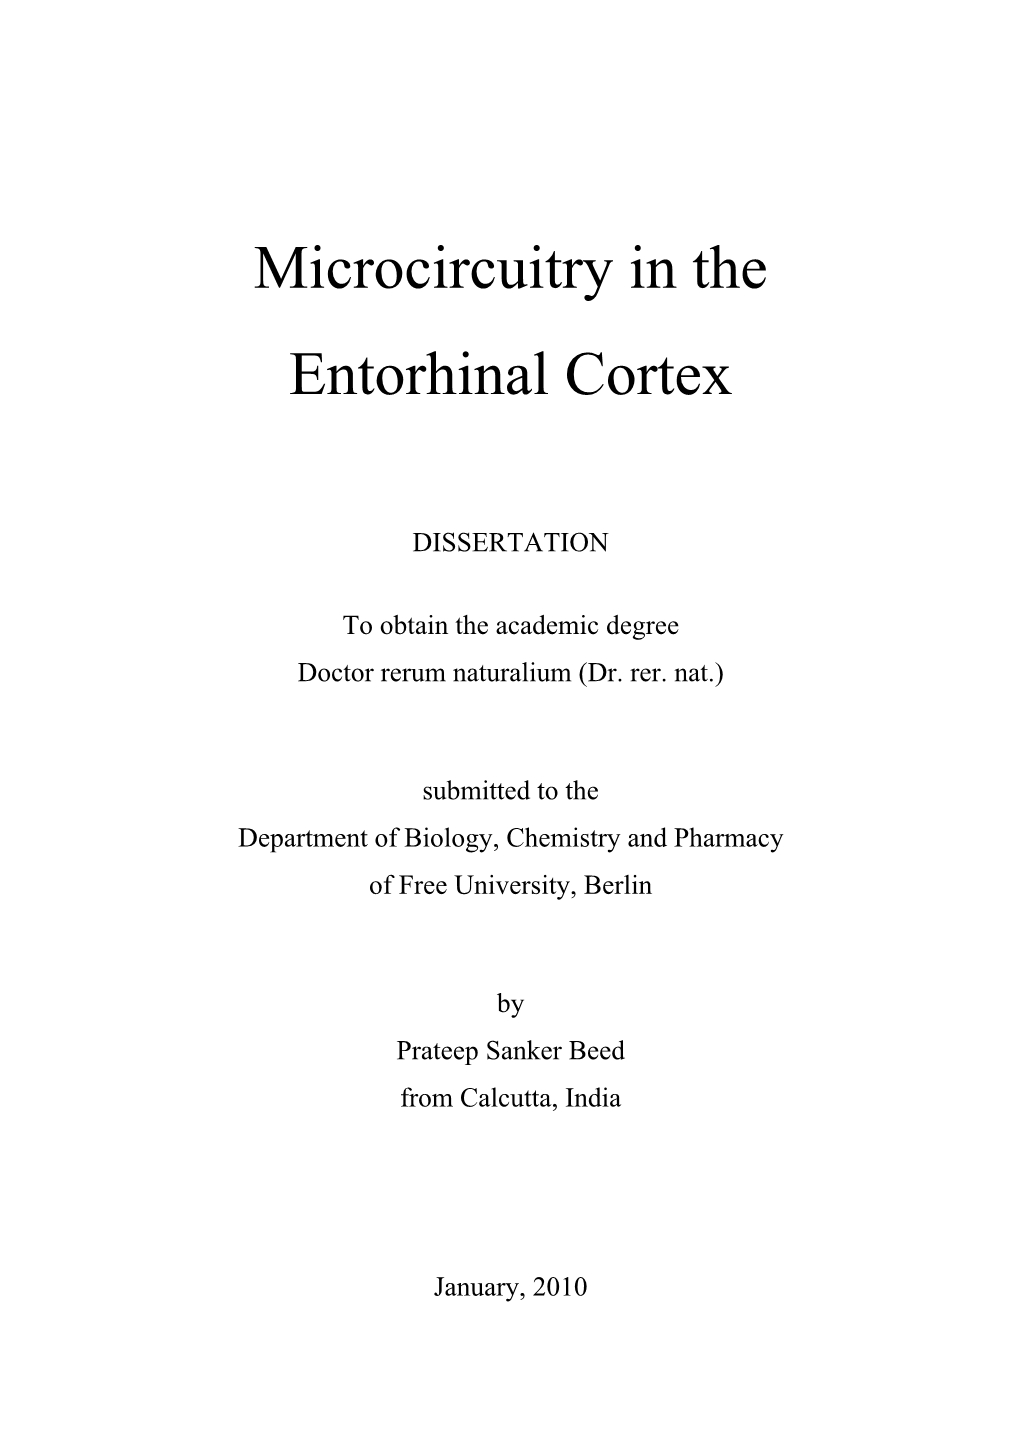 Microcircuitry in the Entorhinal Cortex